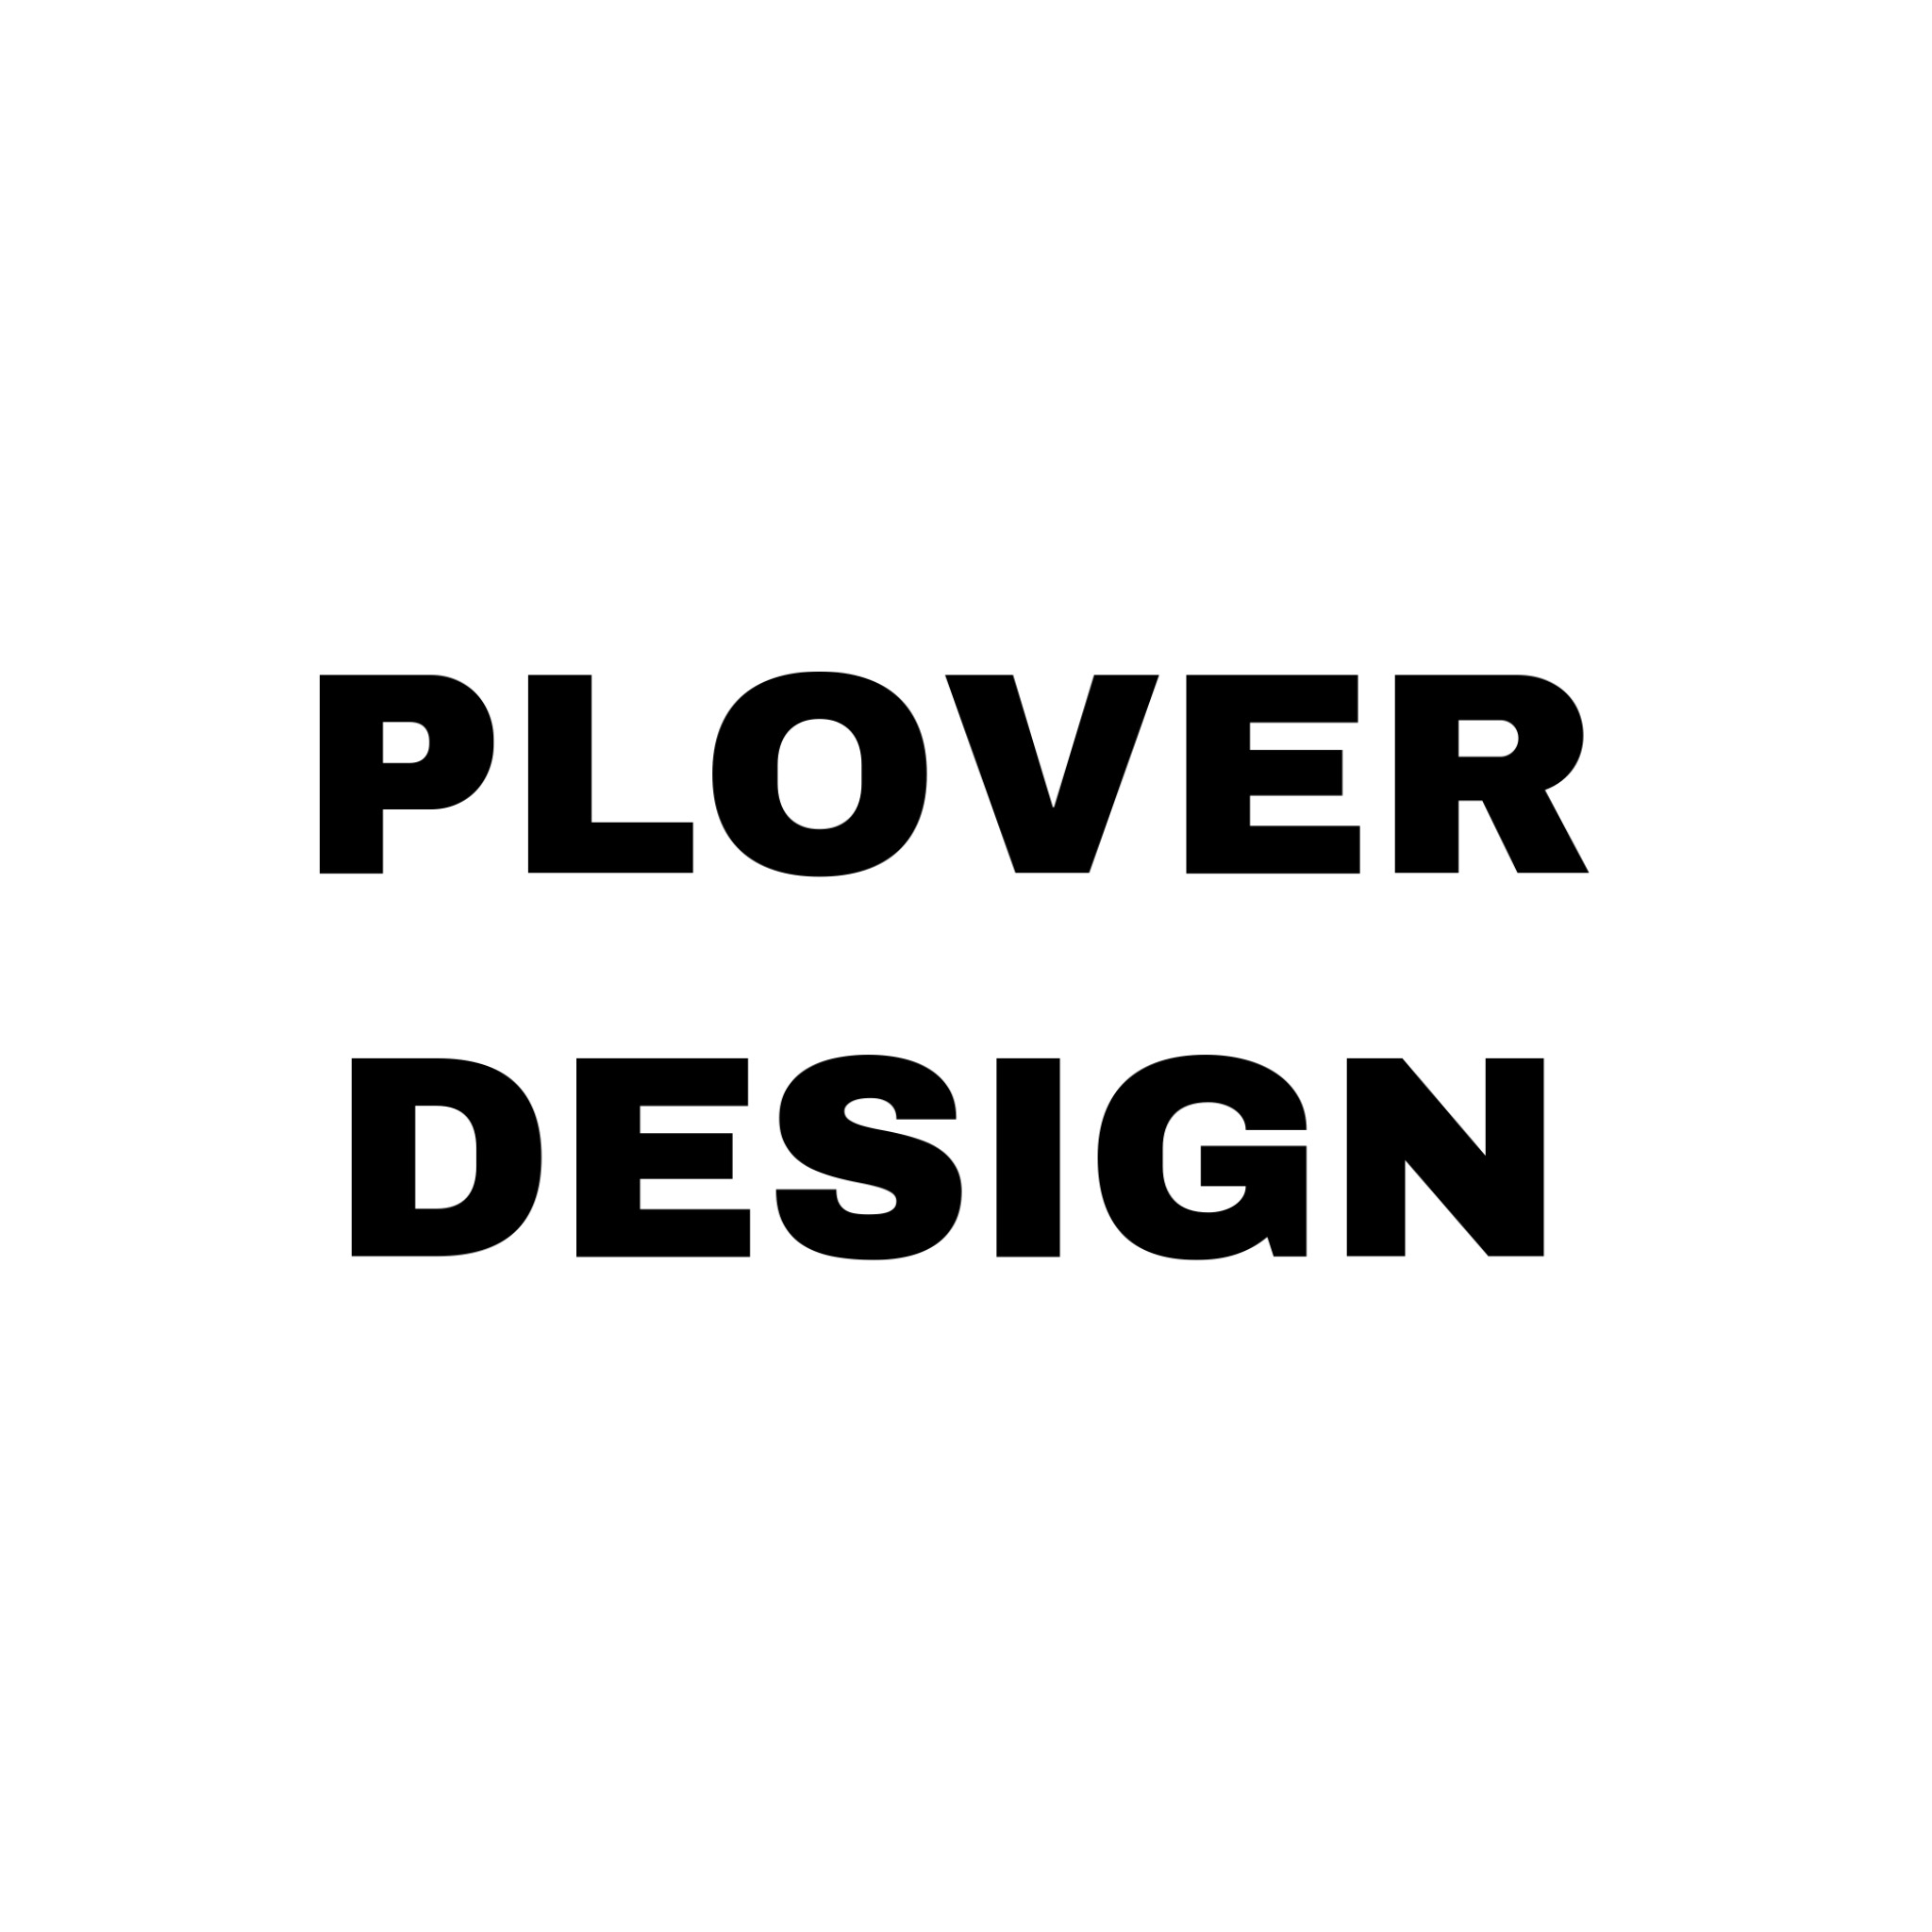 Plover design